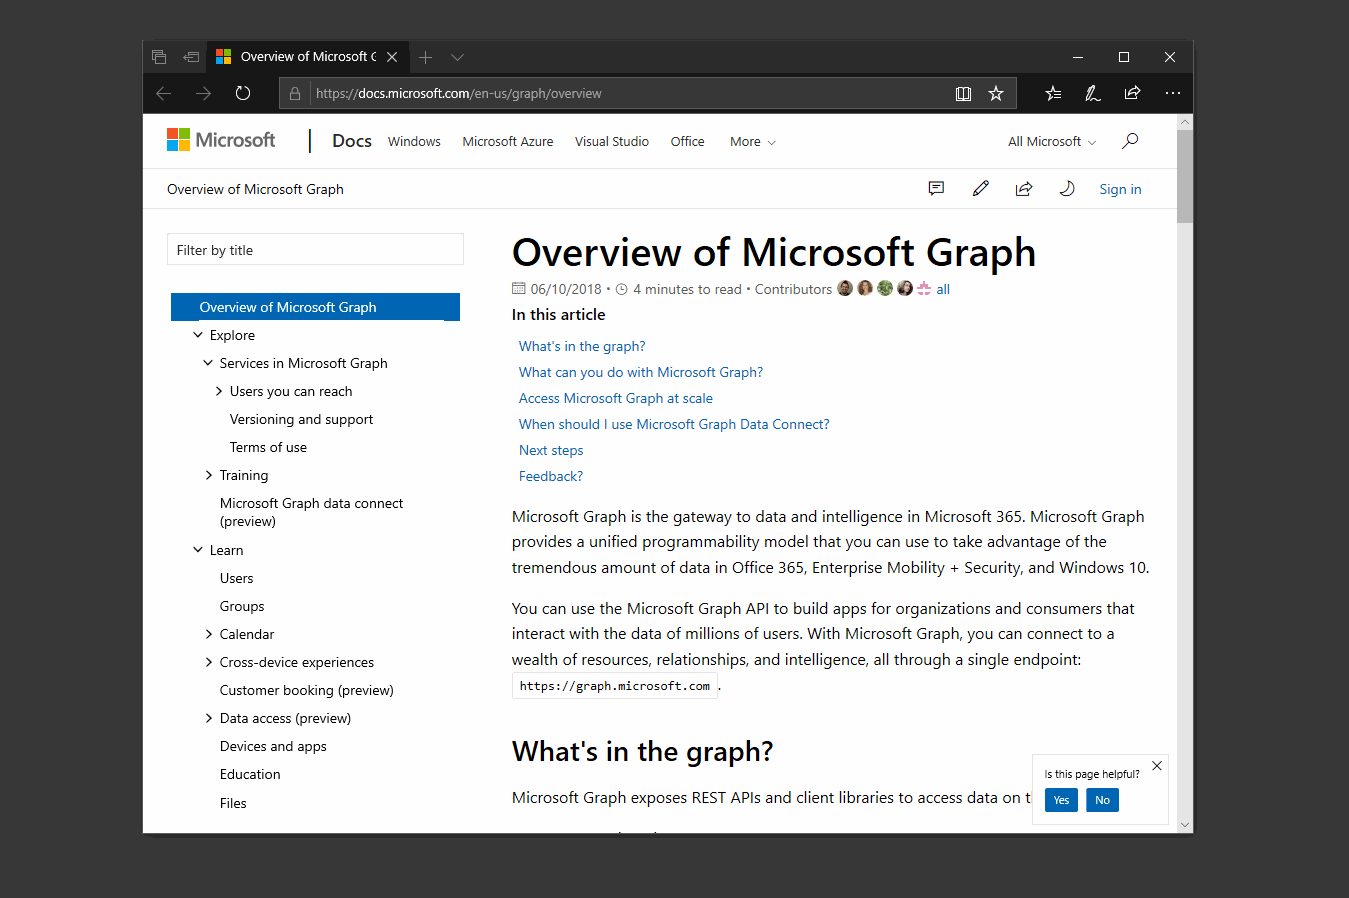 Editing a page on docs.microsoft.com